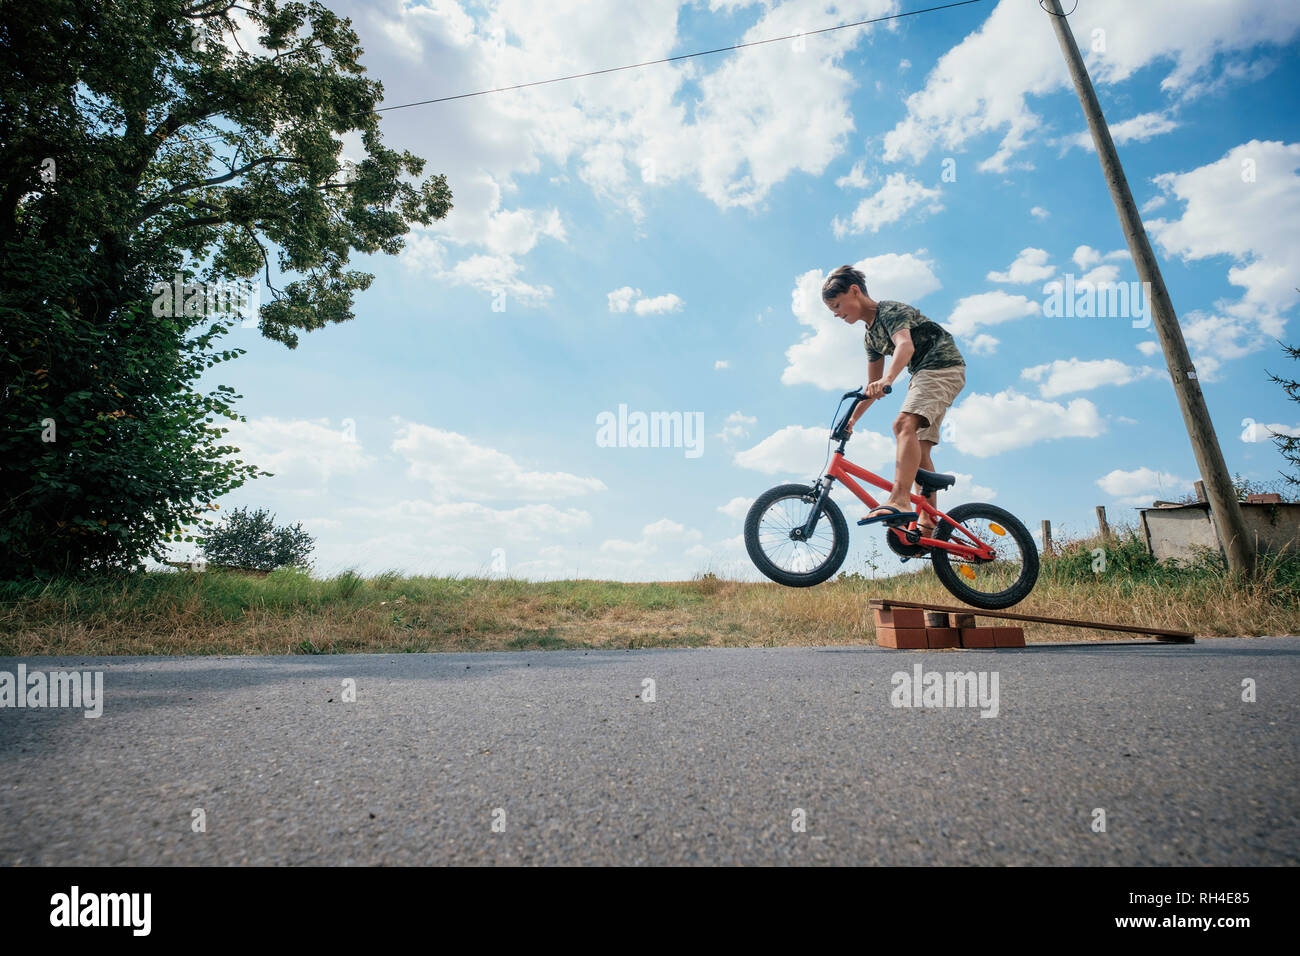 Boy riding bicycle off ramp Stock Photo